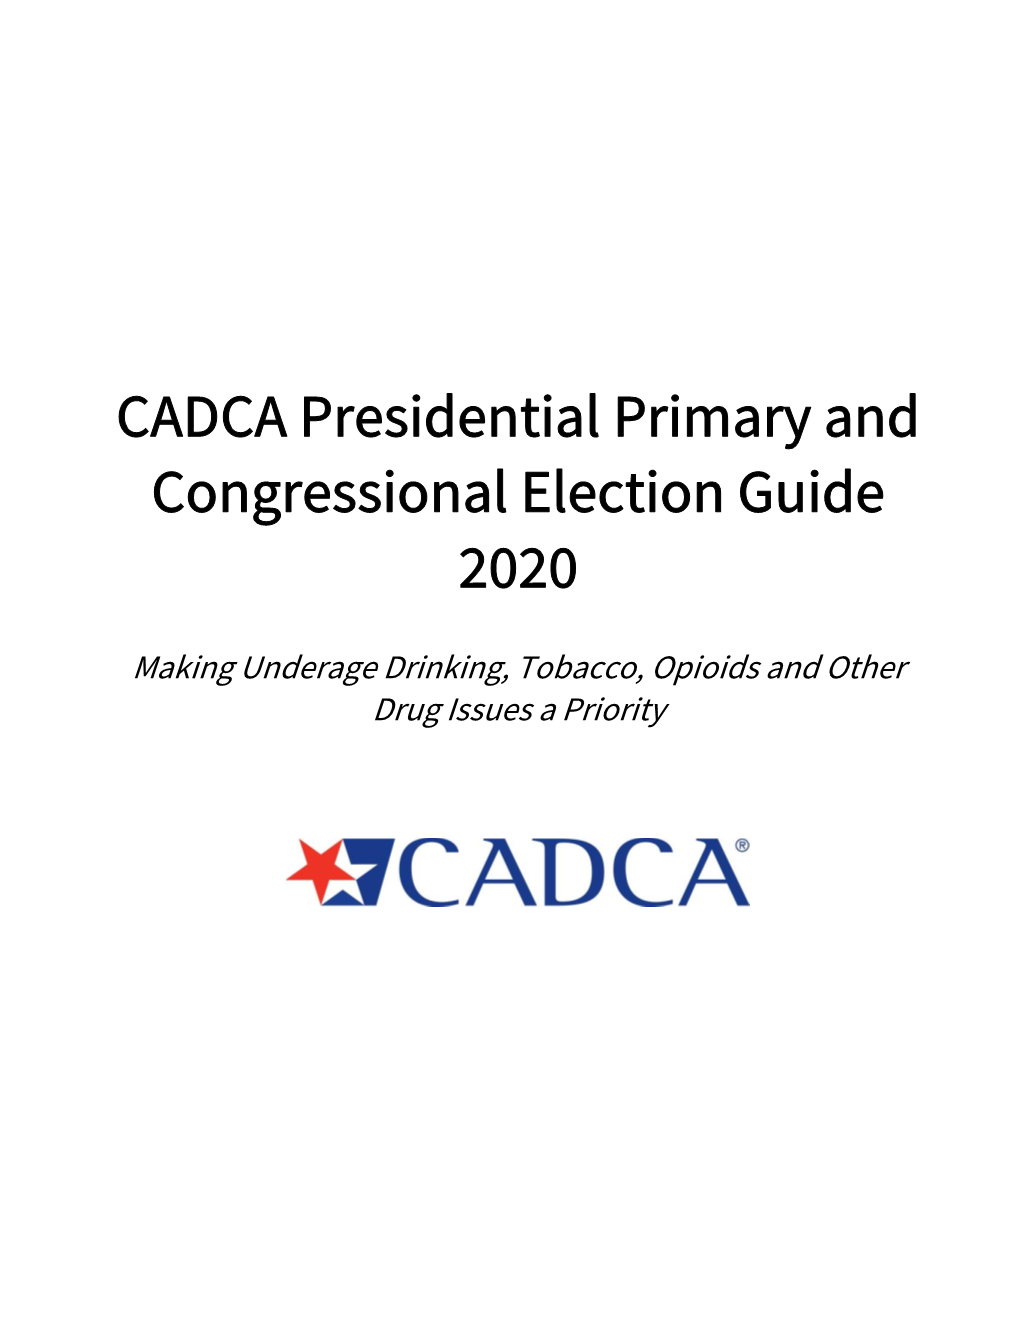 CADCA Election Guide